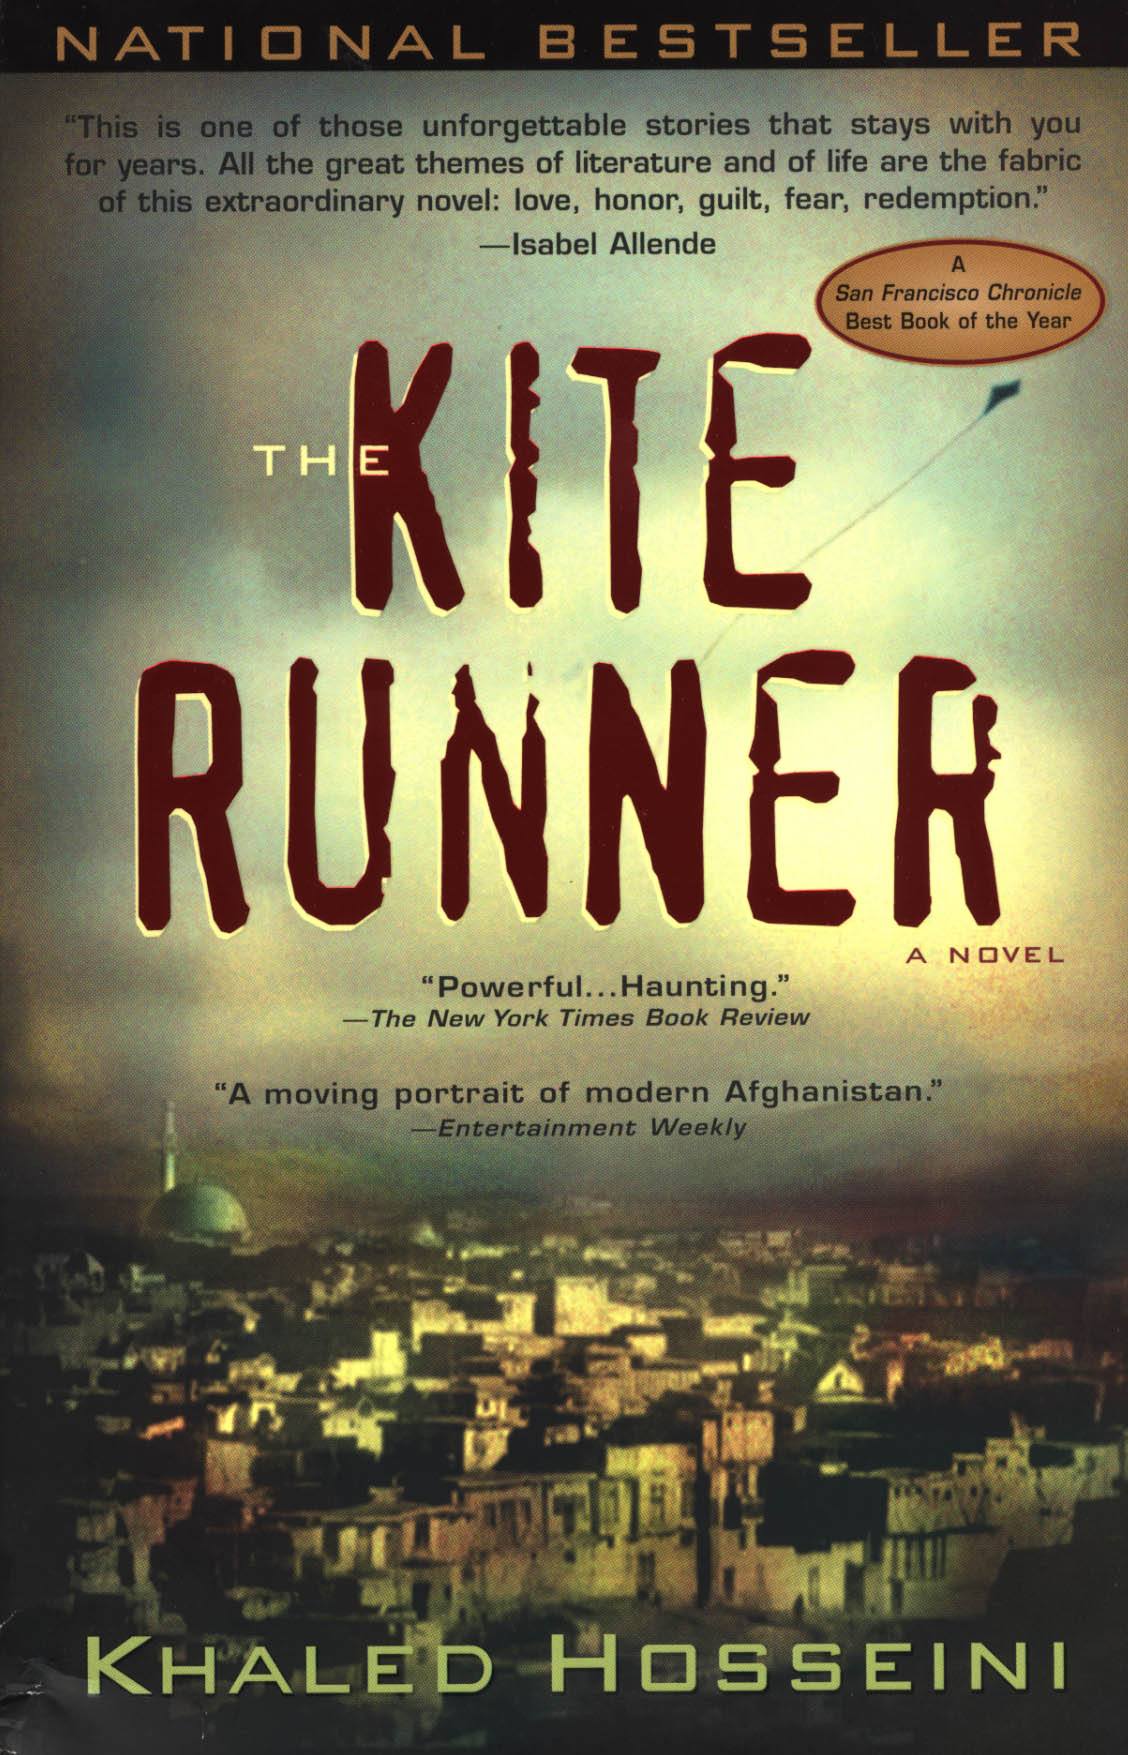 The Kite Runner most interesting book by Khaled Hosseini